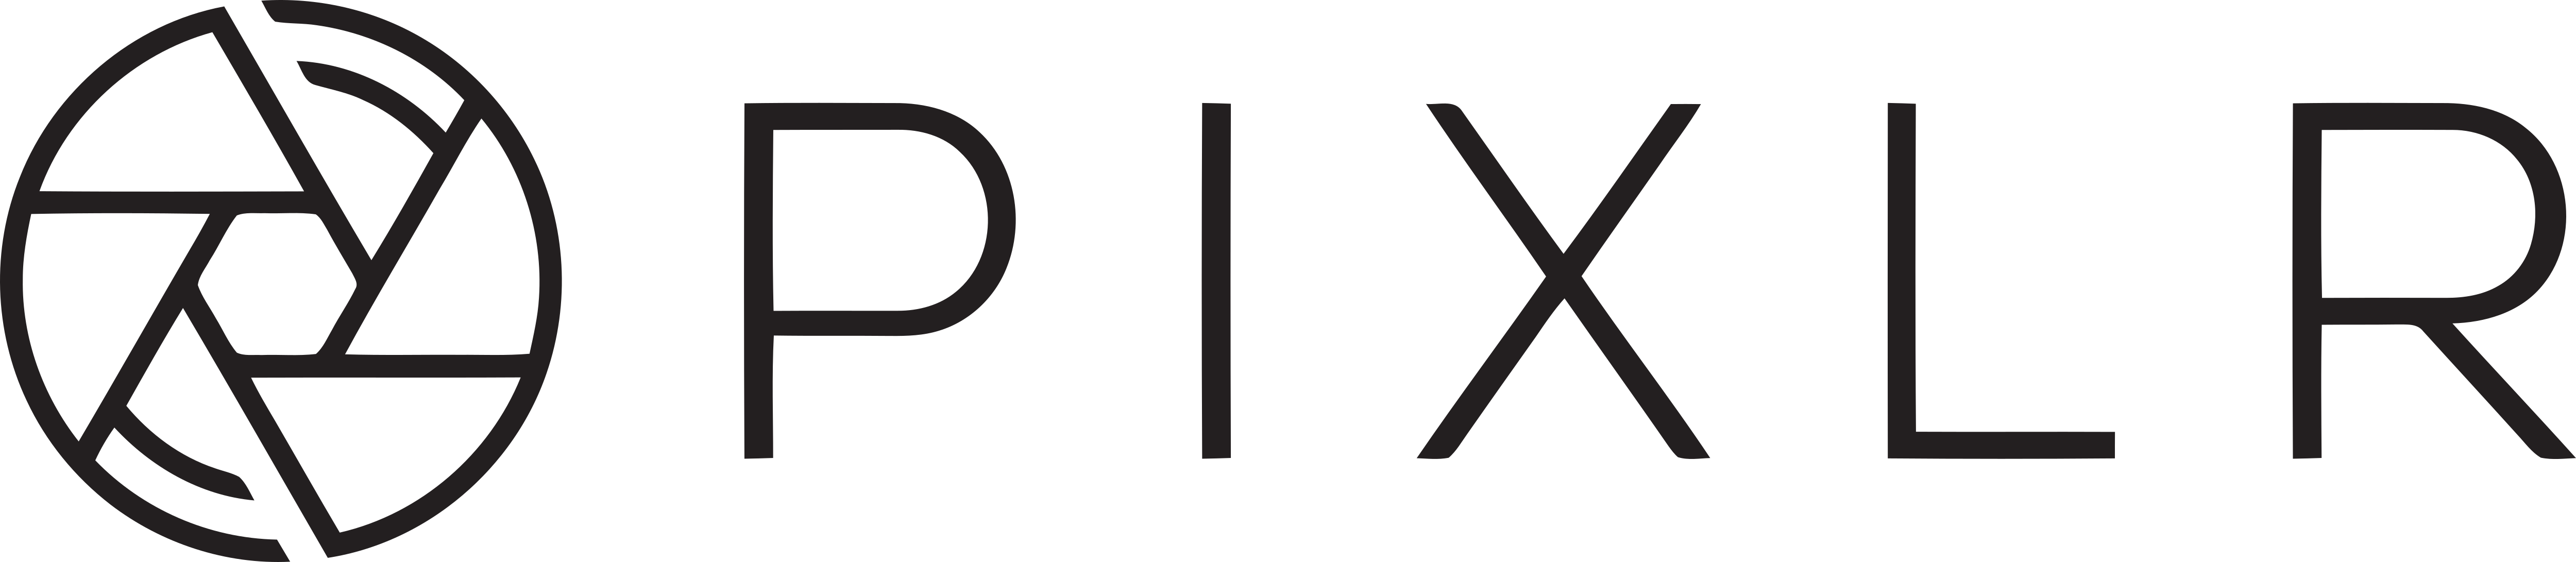 pixlr transparent logo maker